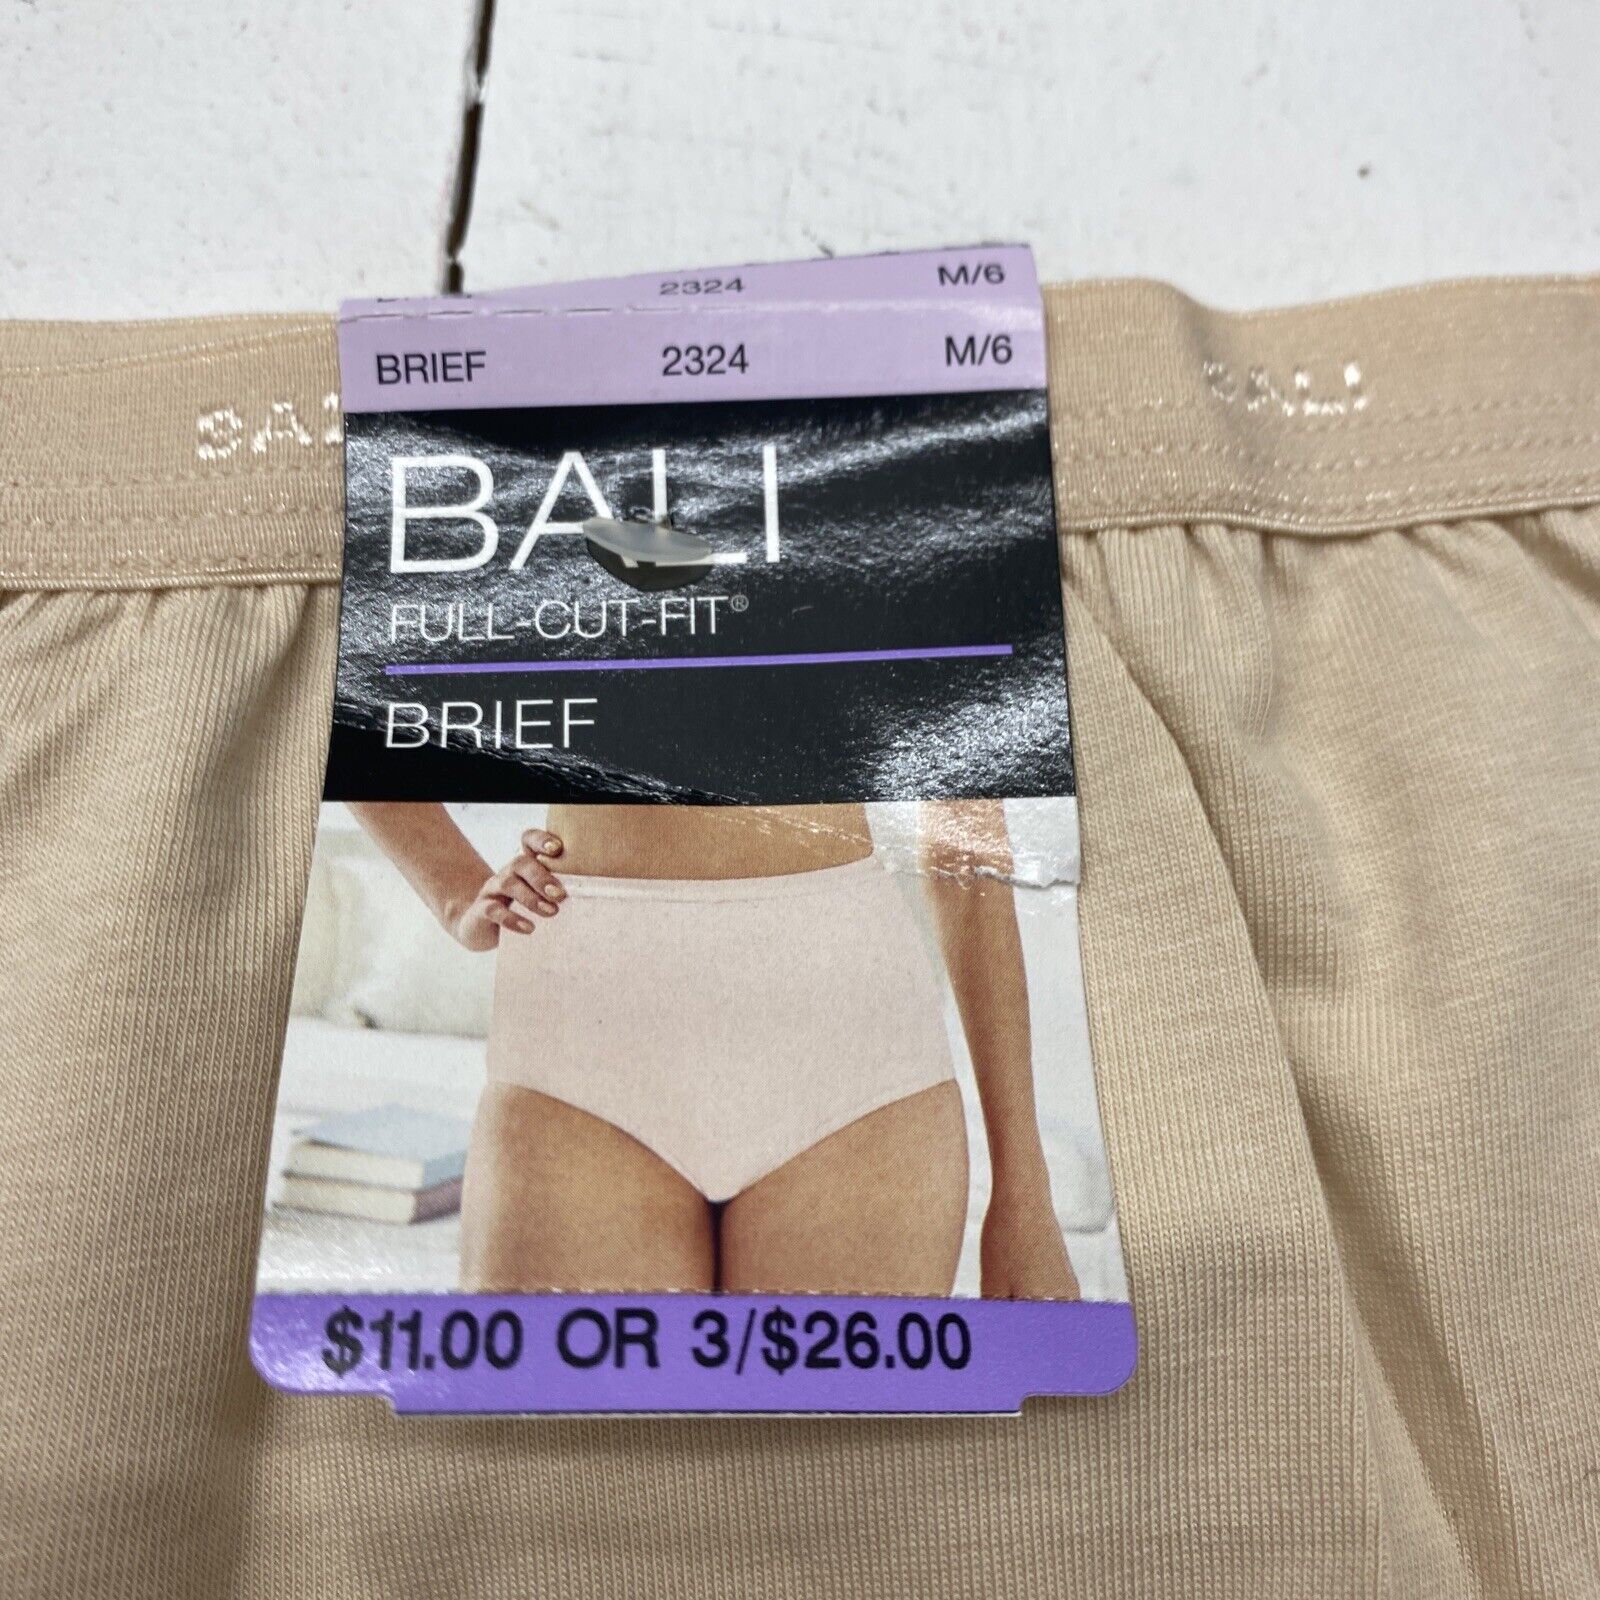 Bali womens Full Cut Fit Cotton Stretch Hi-cut Panty Underwear